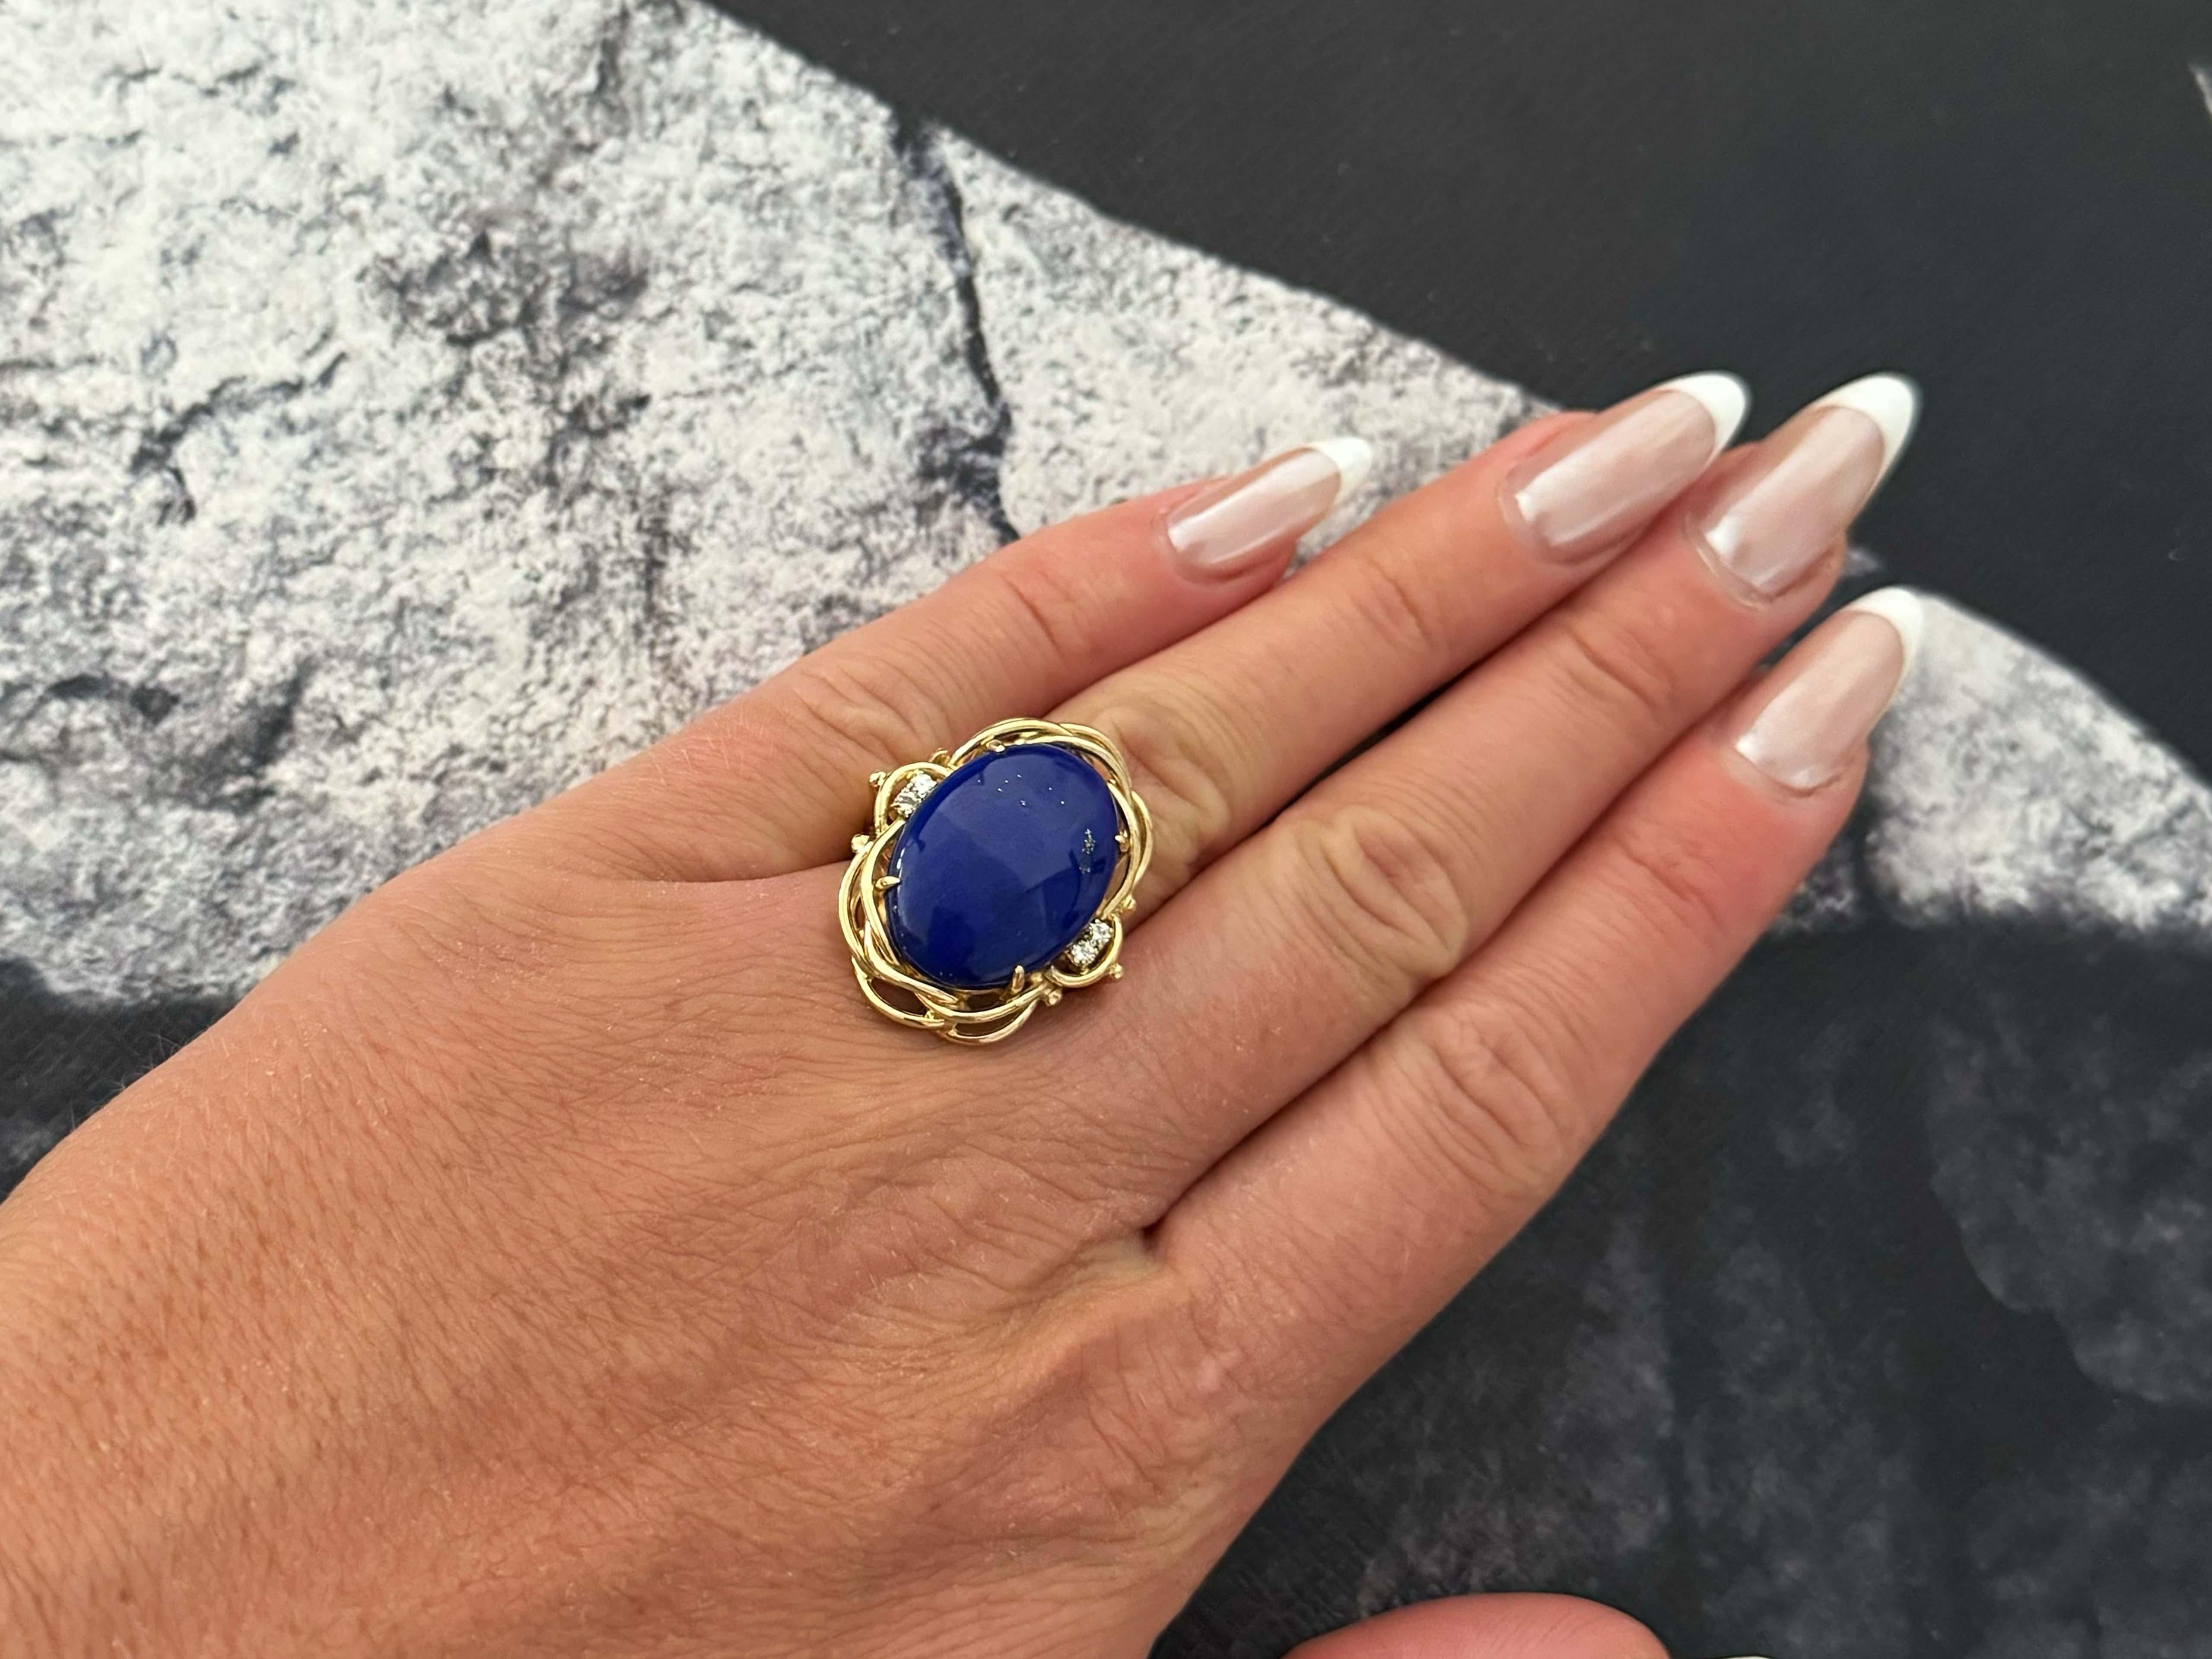 Ring Specifications:

Metal: 14k Yellow Gold

Total Weight: 9.6 Grams

Gemstone: Lapis Lazuli

Lapis Lazuli Measurements: ~20.8 mm x  15.2 mm x 5.5 mm

Diamond Count: 4

Diamond Color: G-H

Diamond Carat Weight: 0.08 carats

Diamond Clarity: